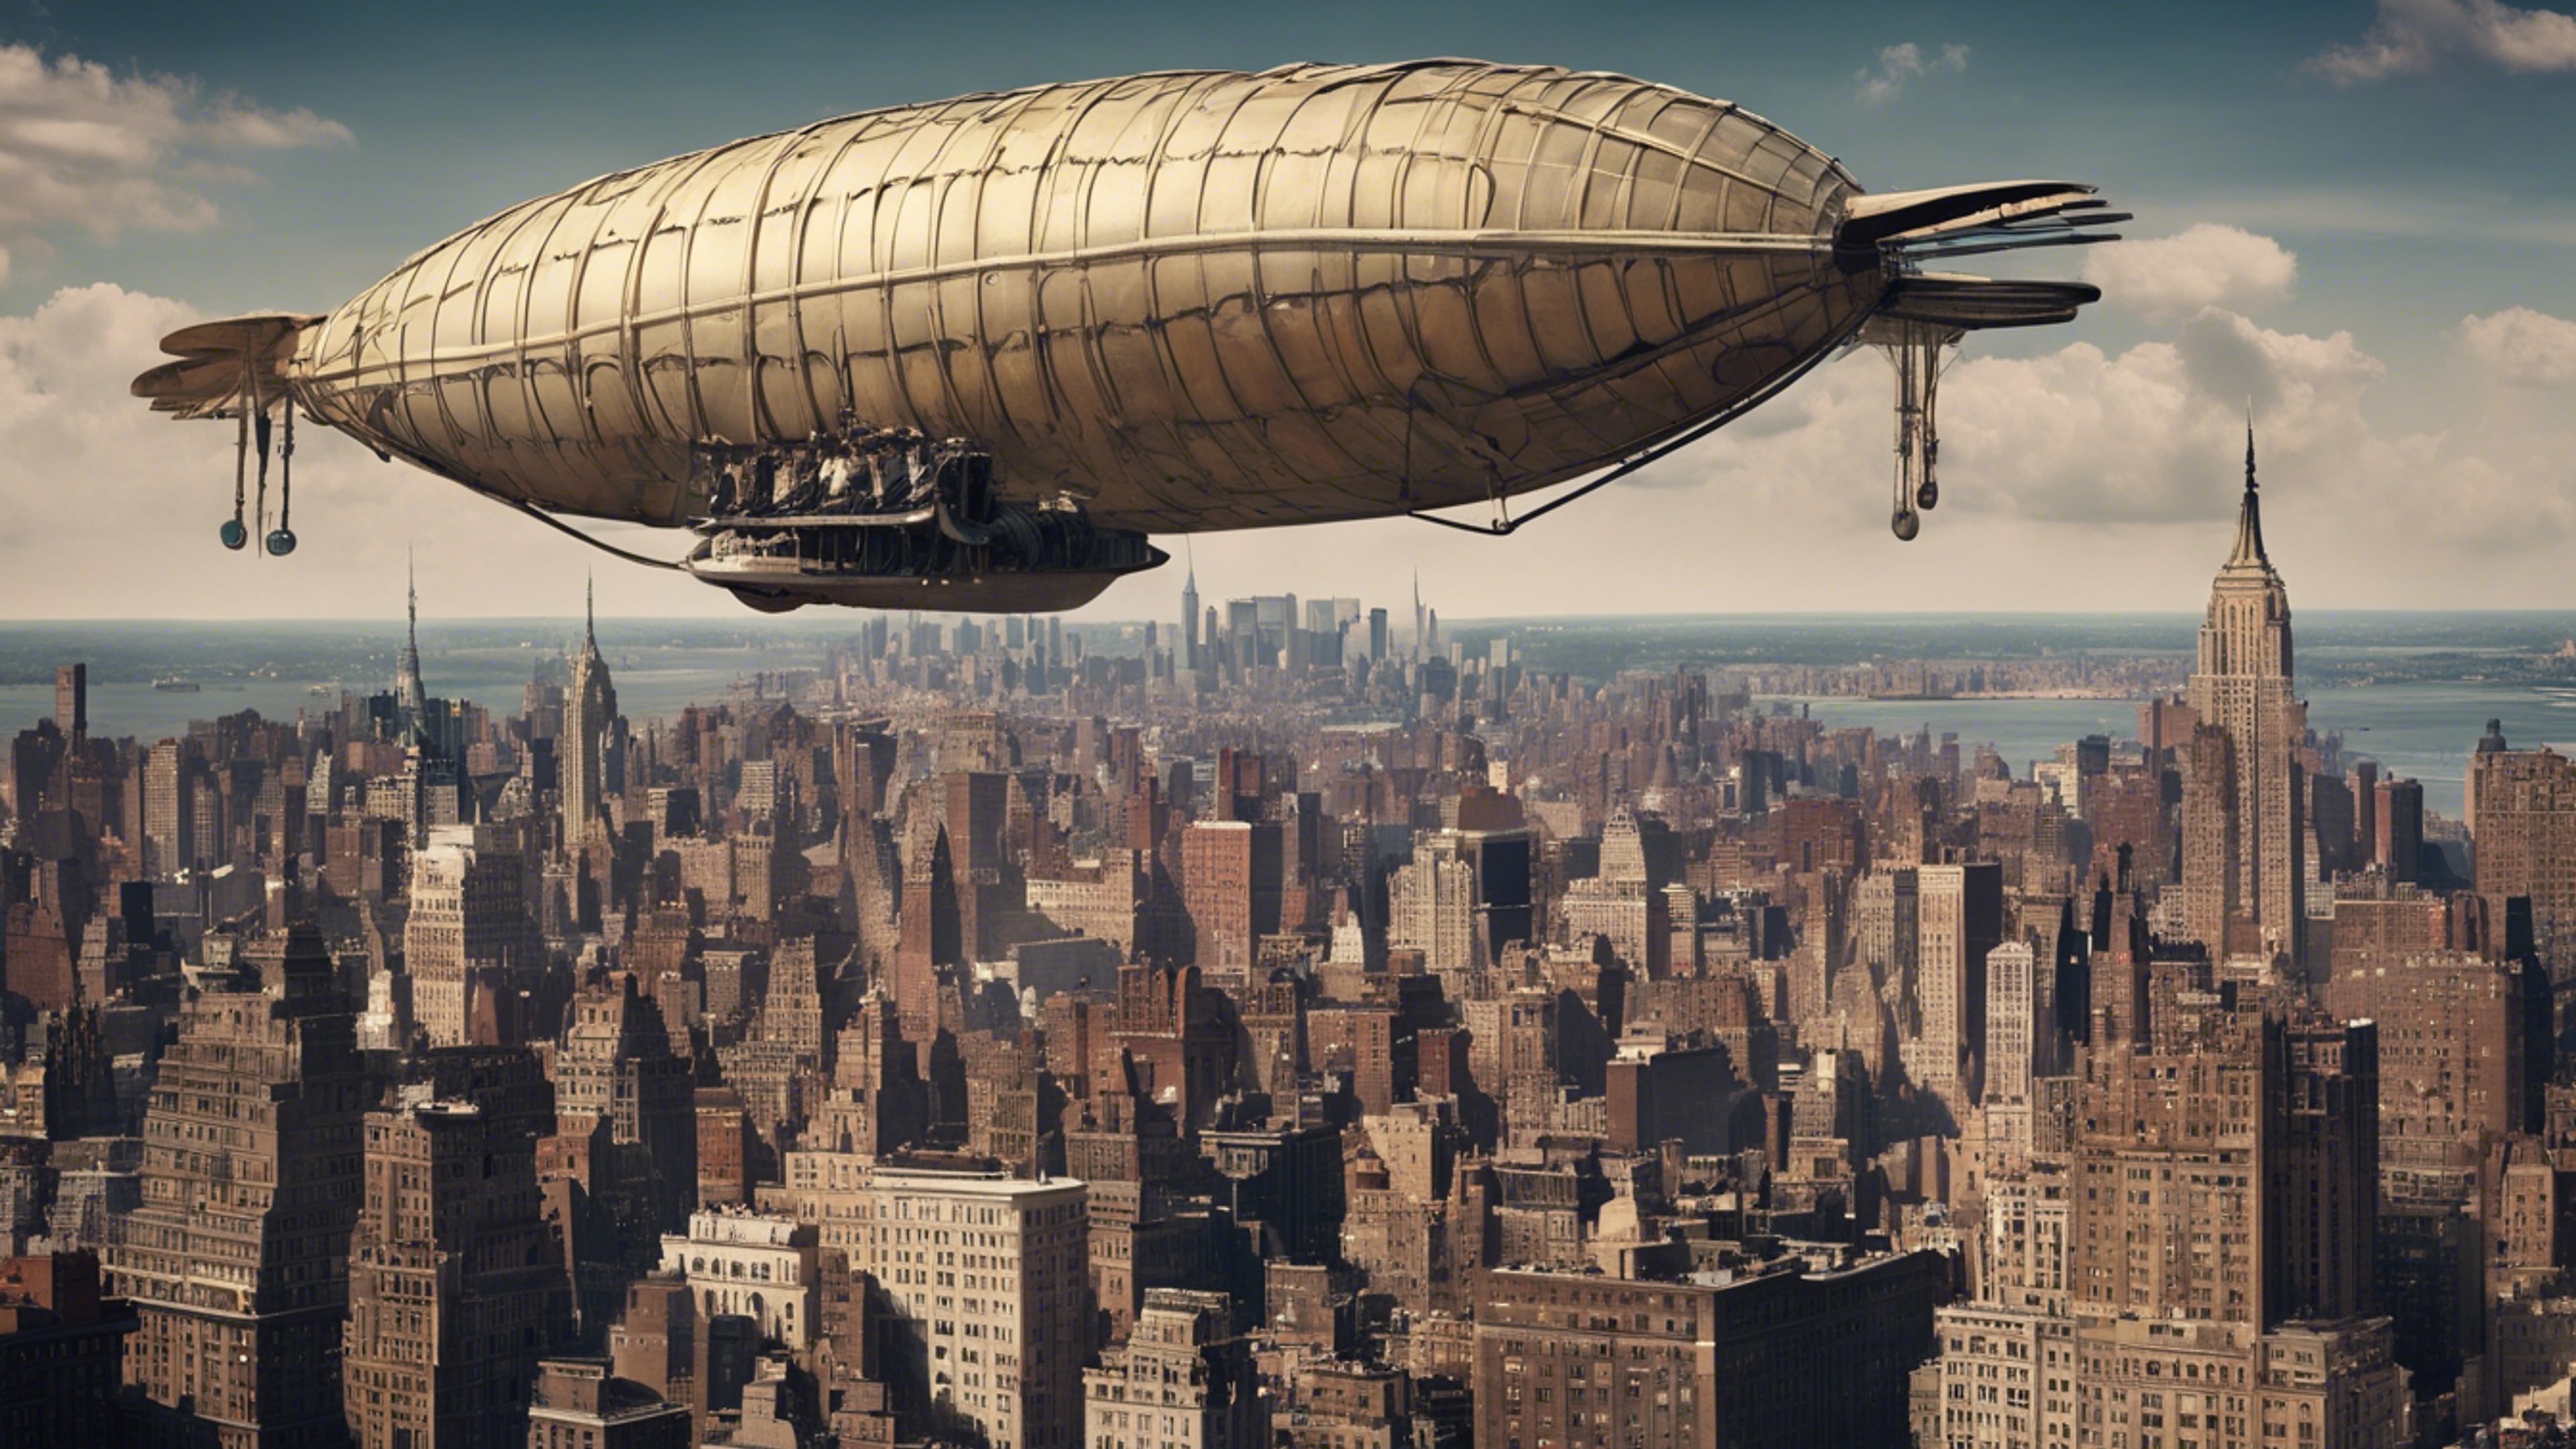 A nostalgic skyline view of 1920s New York City, peppered with zeppelins. Papel de parede[5c42609b28fb4c129601]